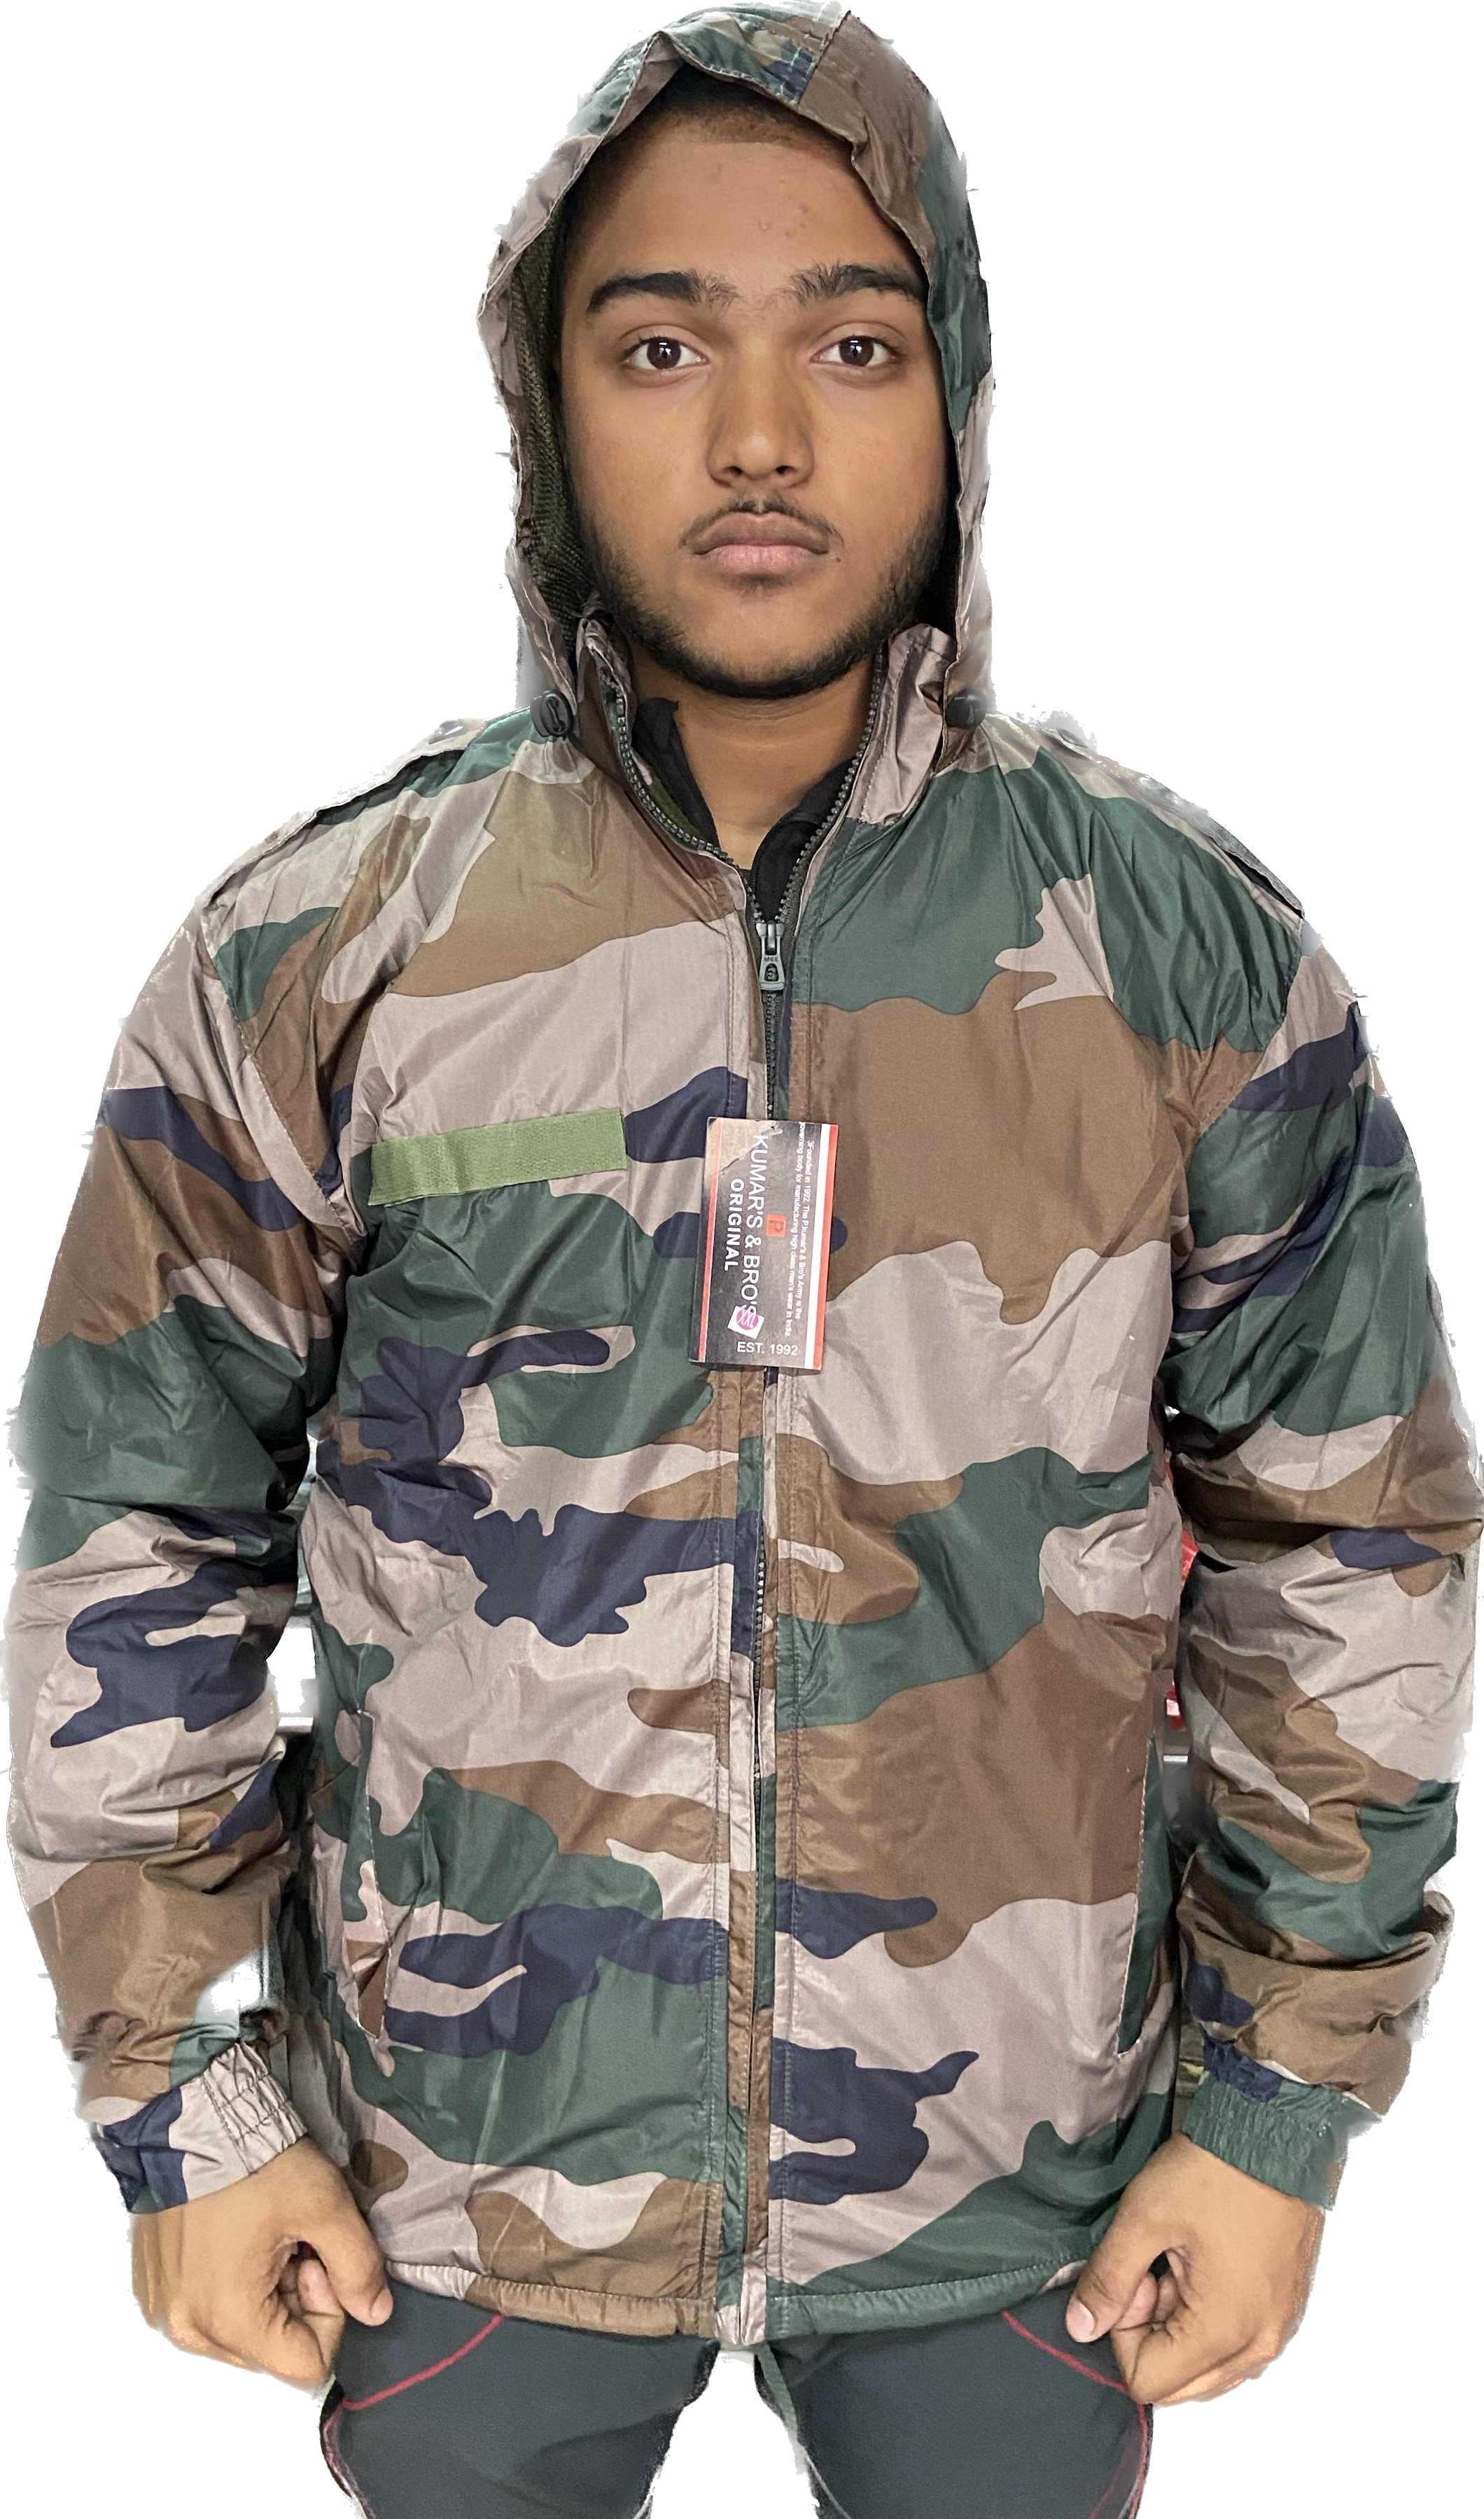 Buy Nuan Indian Army Jacket Men Multicolour at Amazon.in